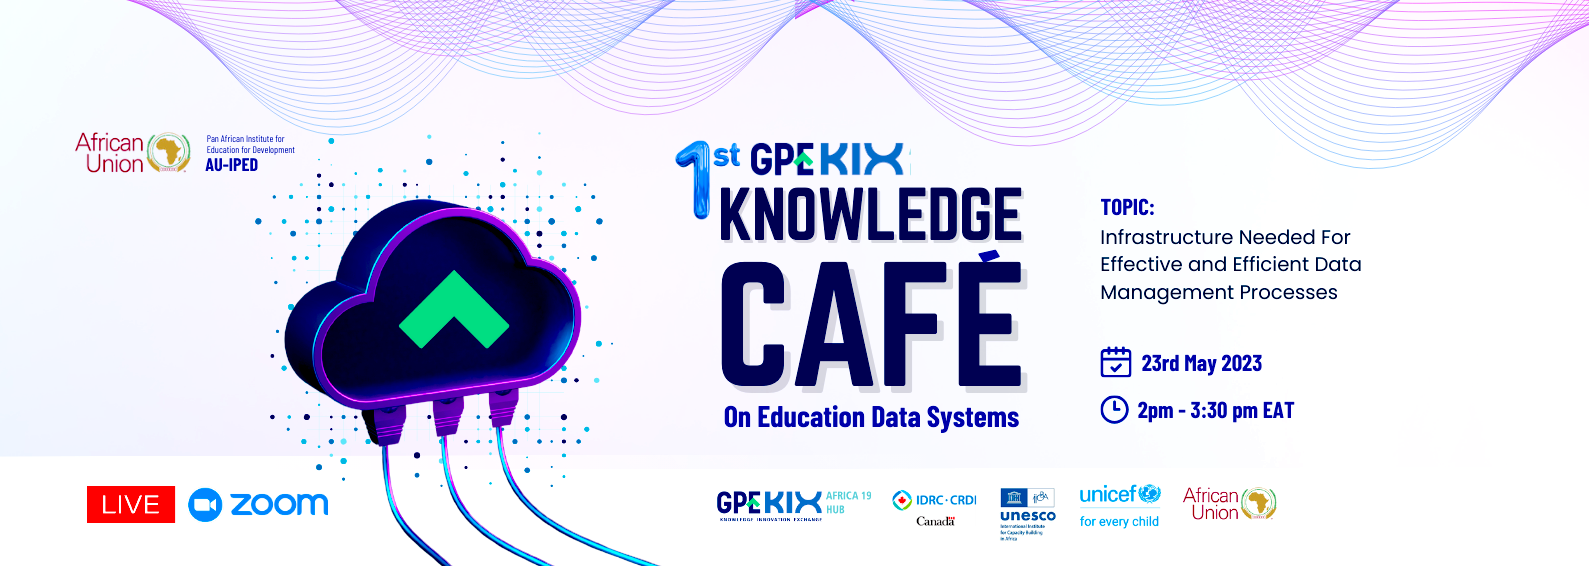 GPE-KIX Africa 19 Knowledge Cafe